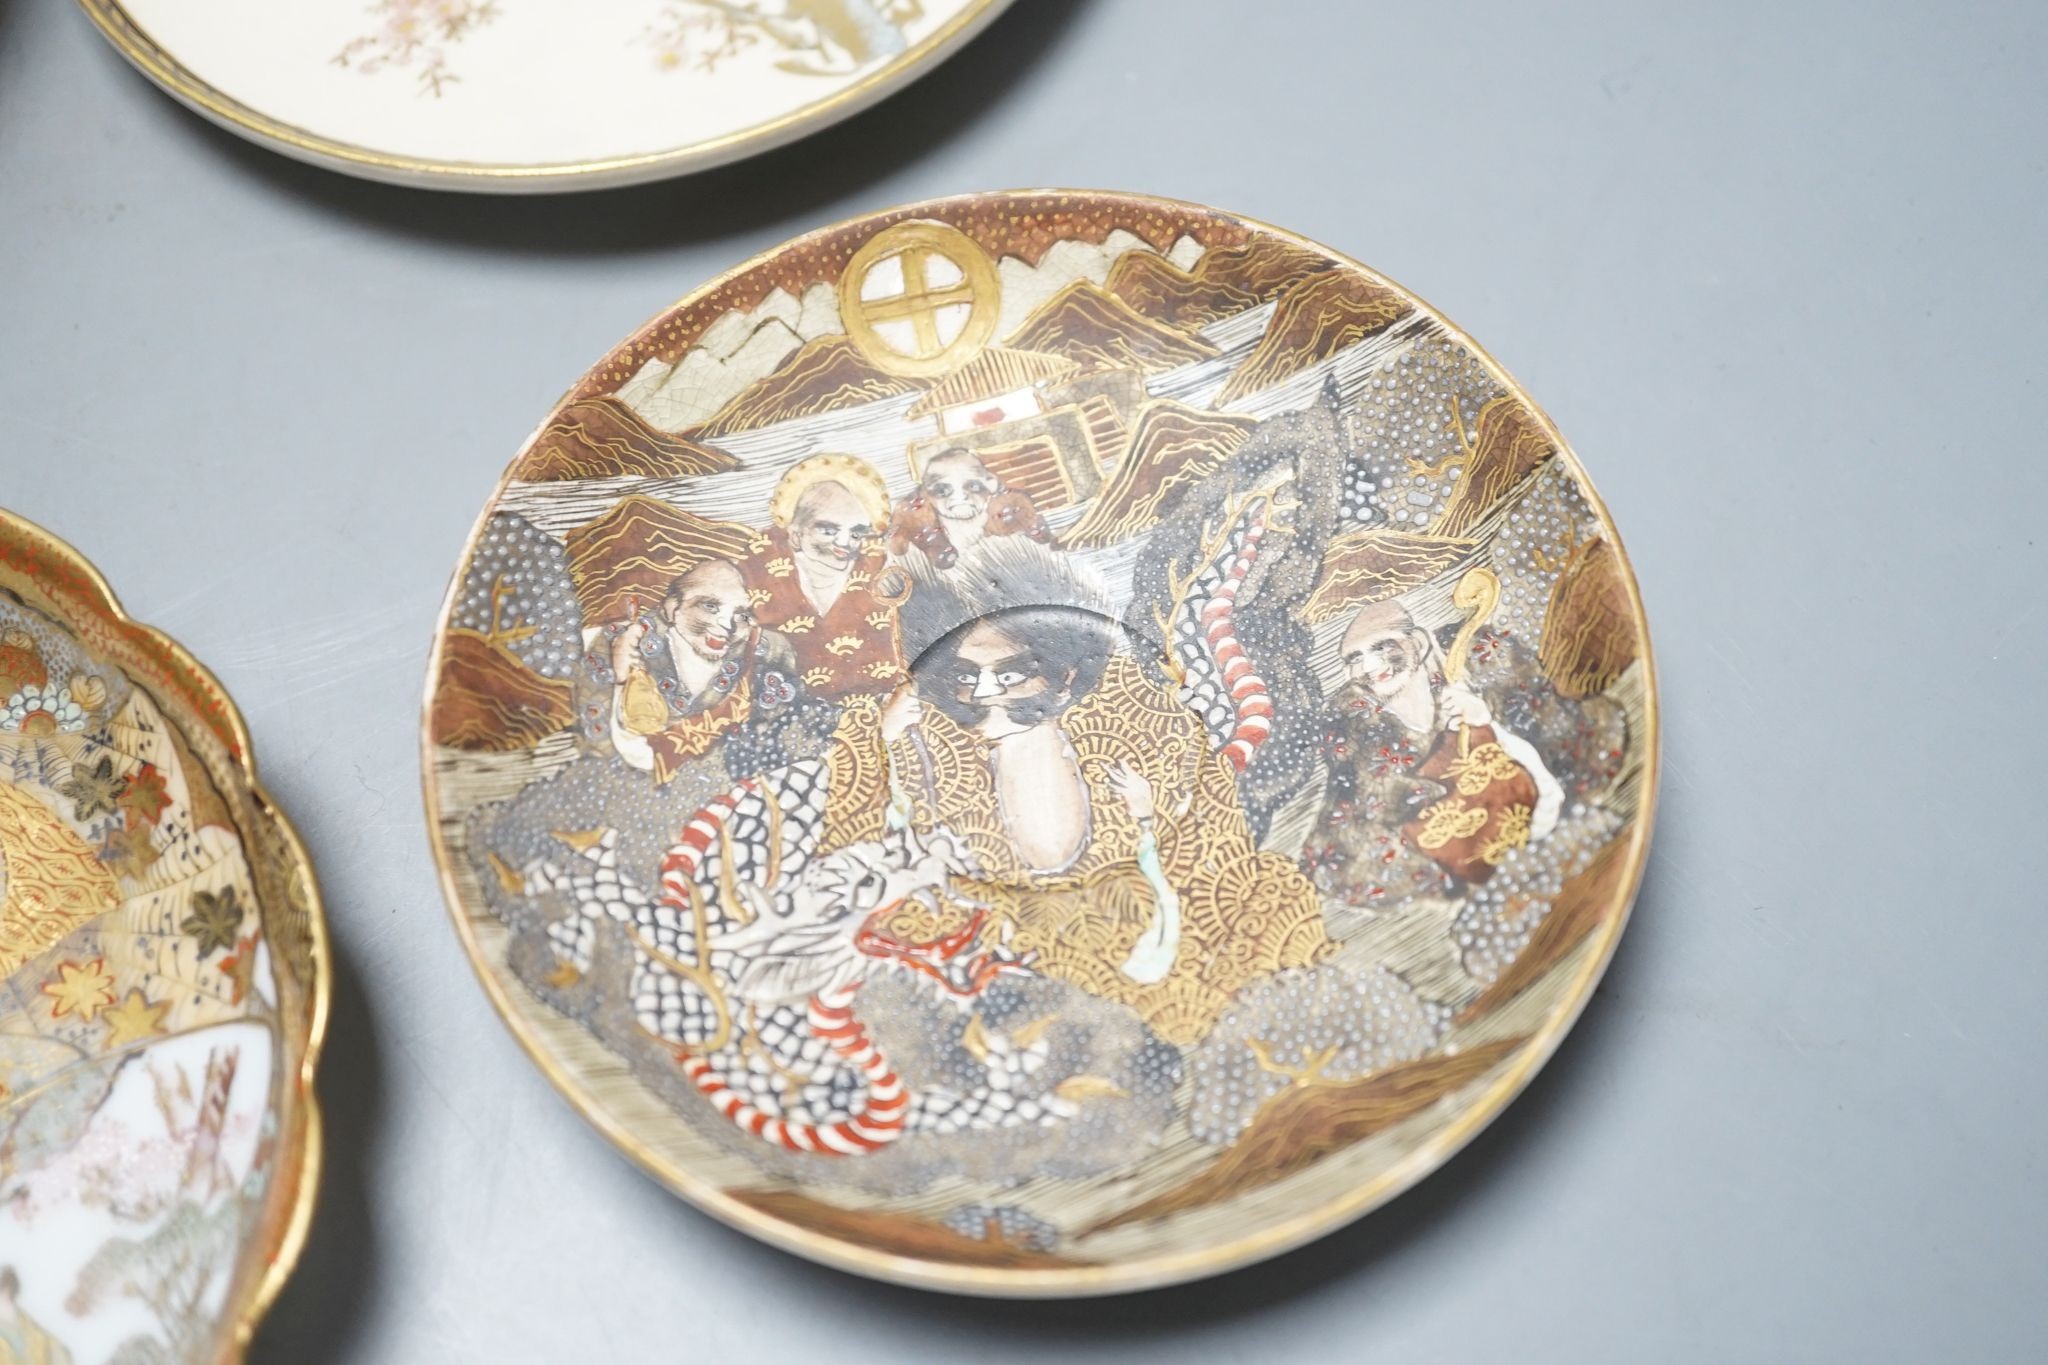 Two Japanese Satsuma pottery saucers, three Kutani saucers, and Imari dish and a Japanese cloisonné enamel koro and cover